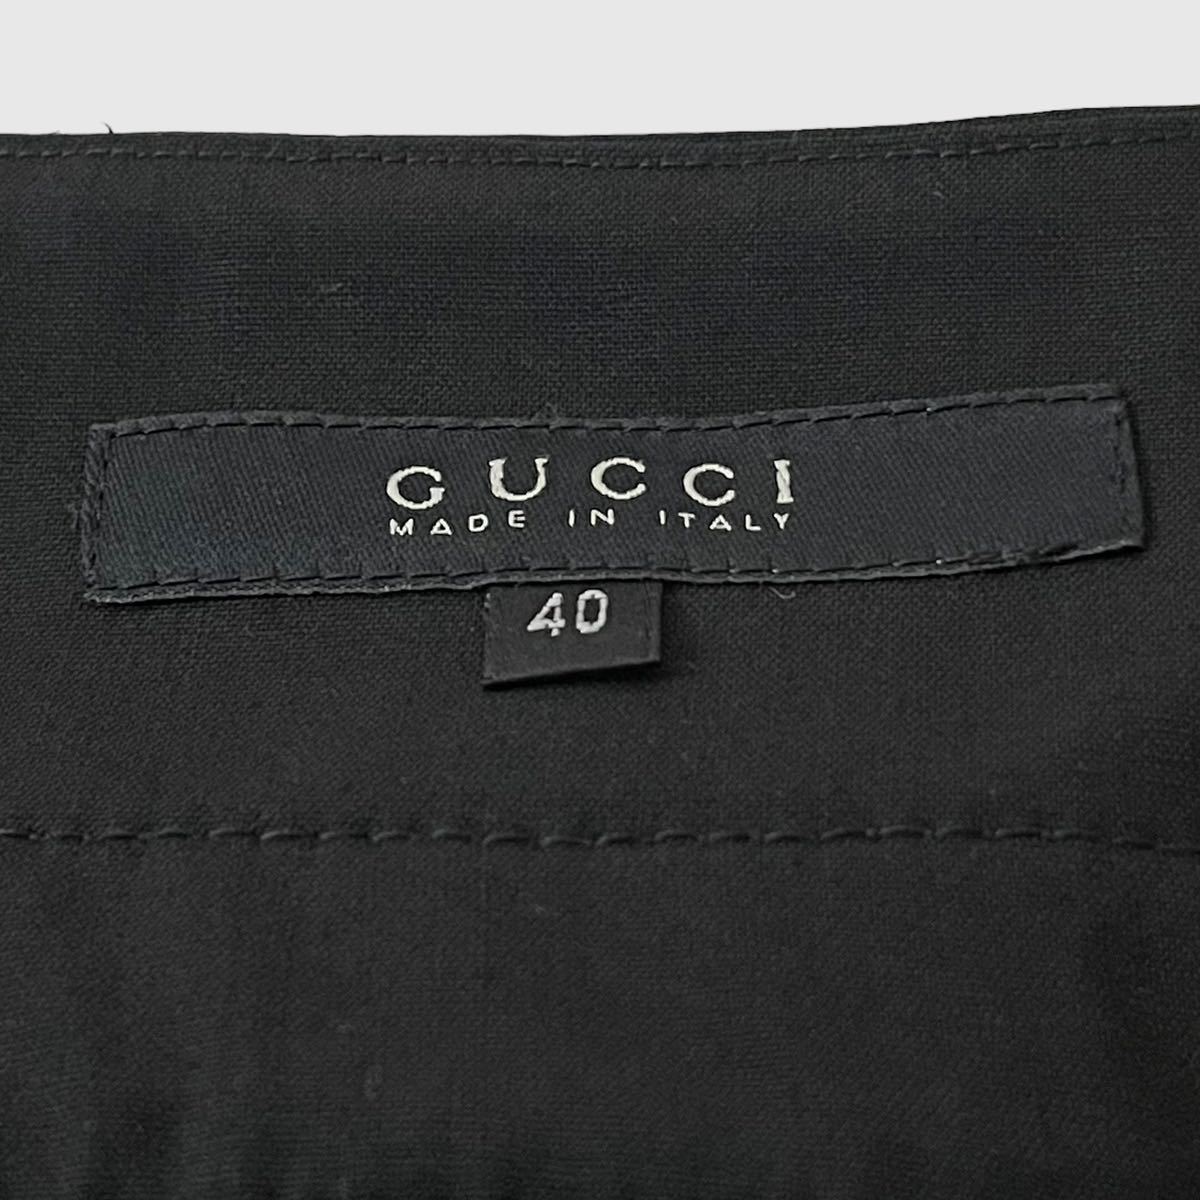 GUCCI Gucci skirt black 